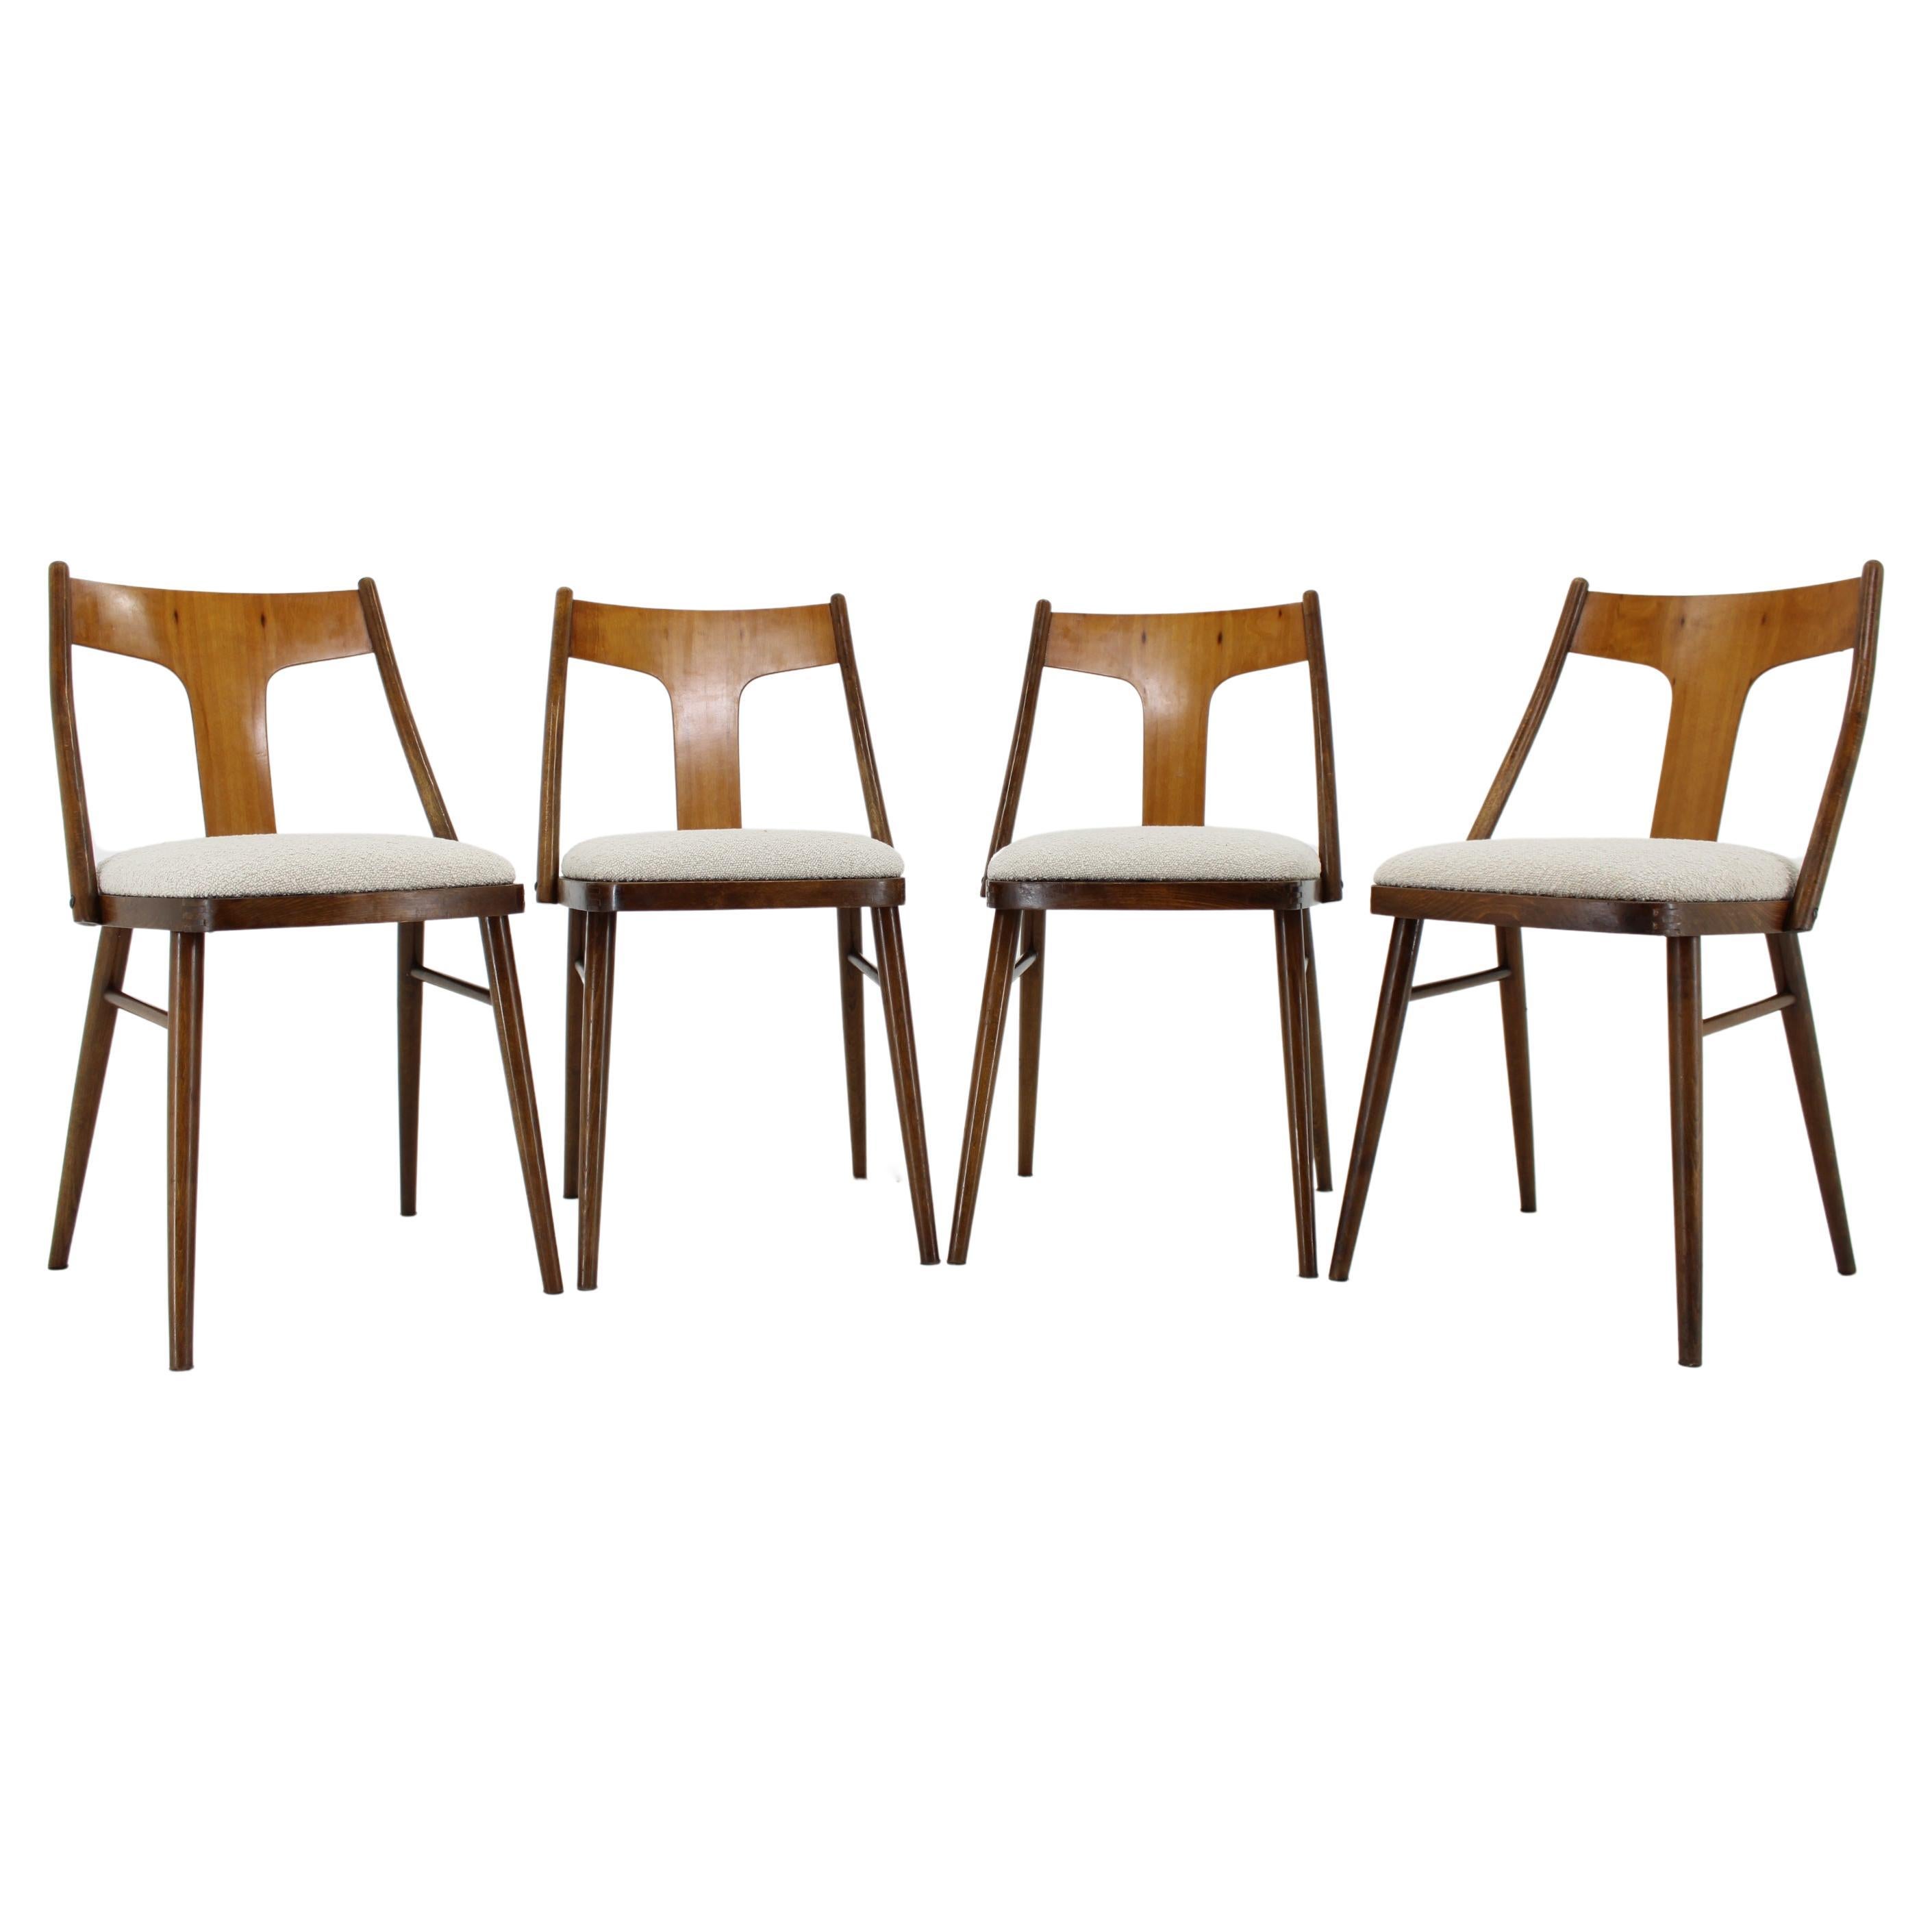 1950s Set of 4 Dining Chairs in Walnut Finish, Czechoslovakia 